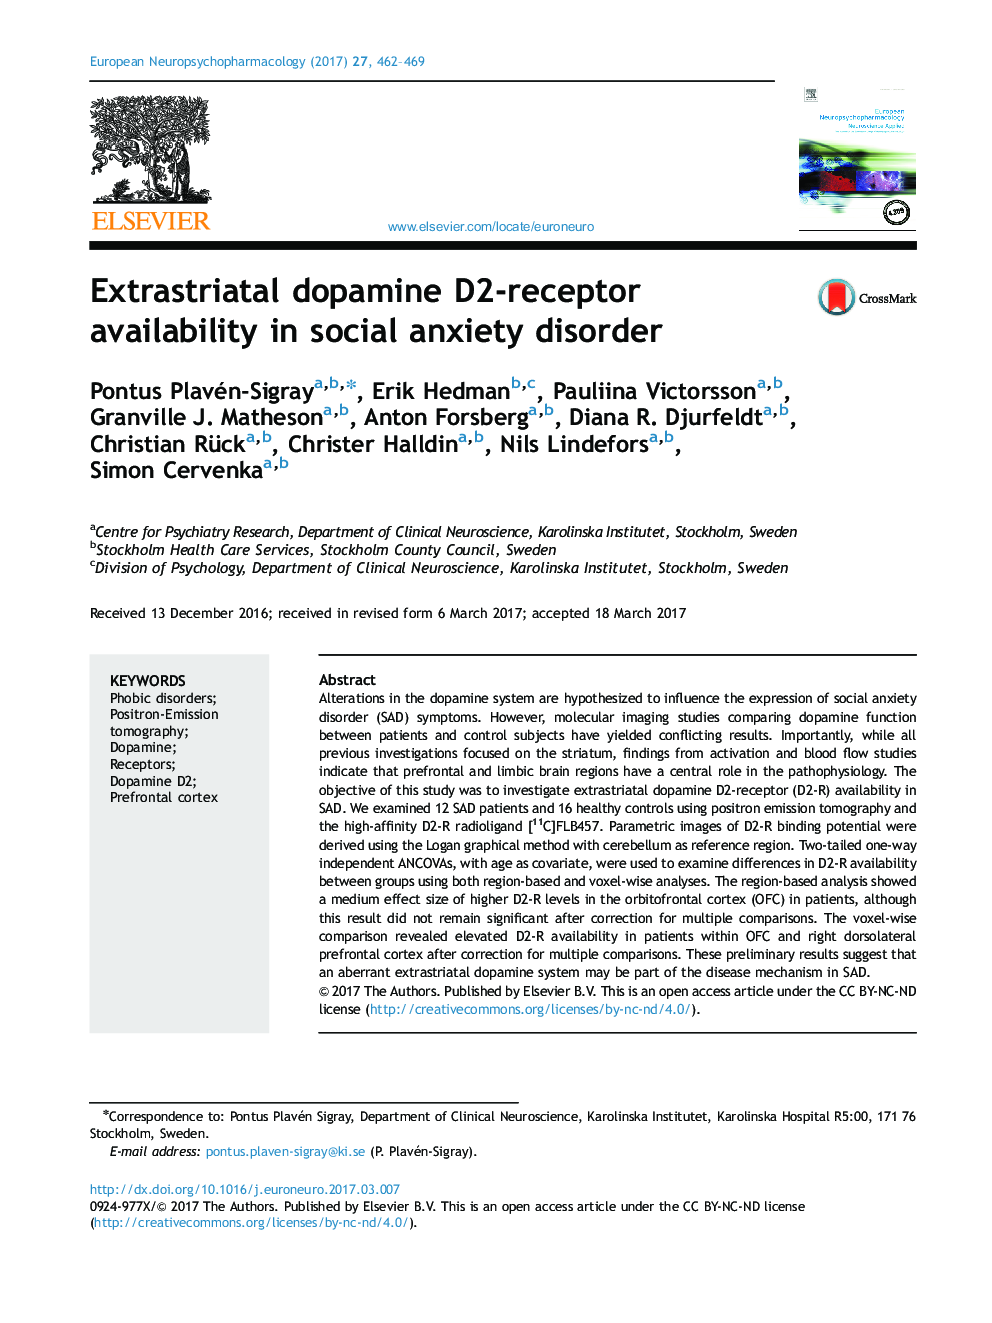 Extrastriatal dopamine D2-receptor availability in social anxiety disorder